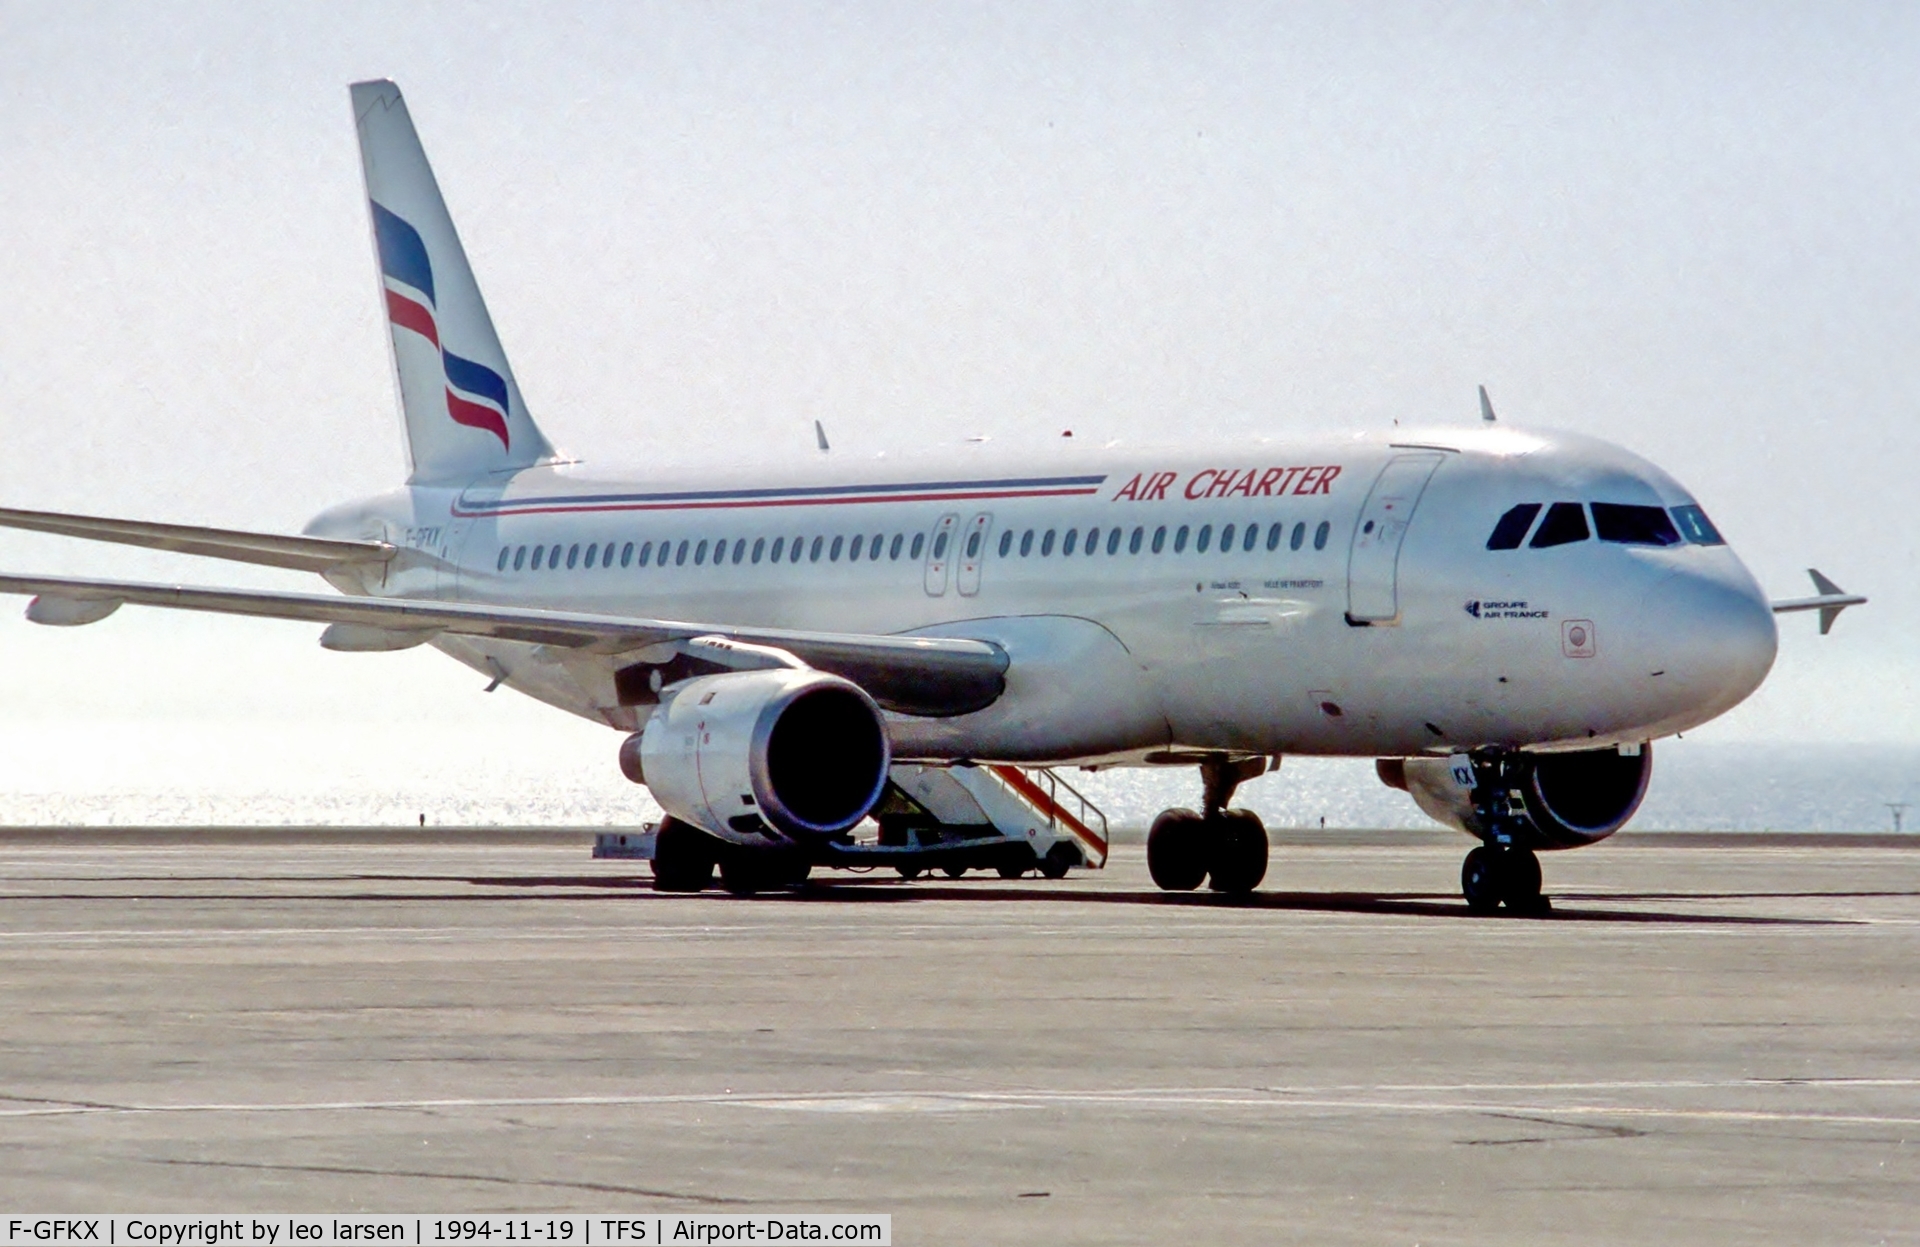 F-GFKX, 1991 Airbus A320-211 C/N 0228, Tenerife TFS 19.11.94 in Air Charter c/s.